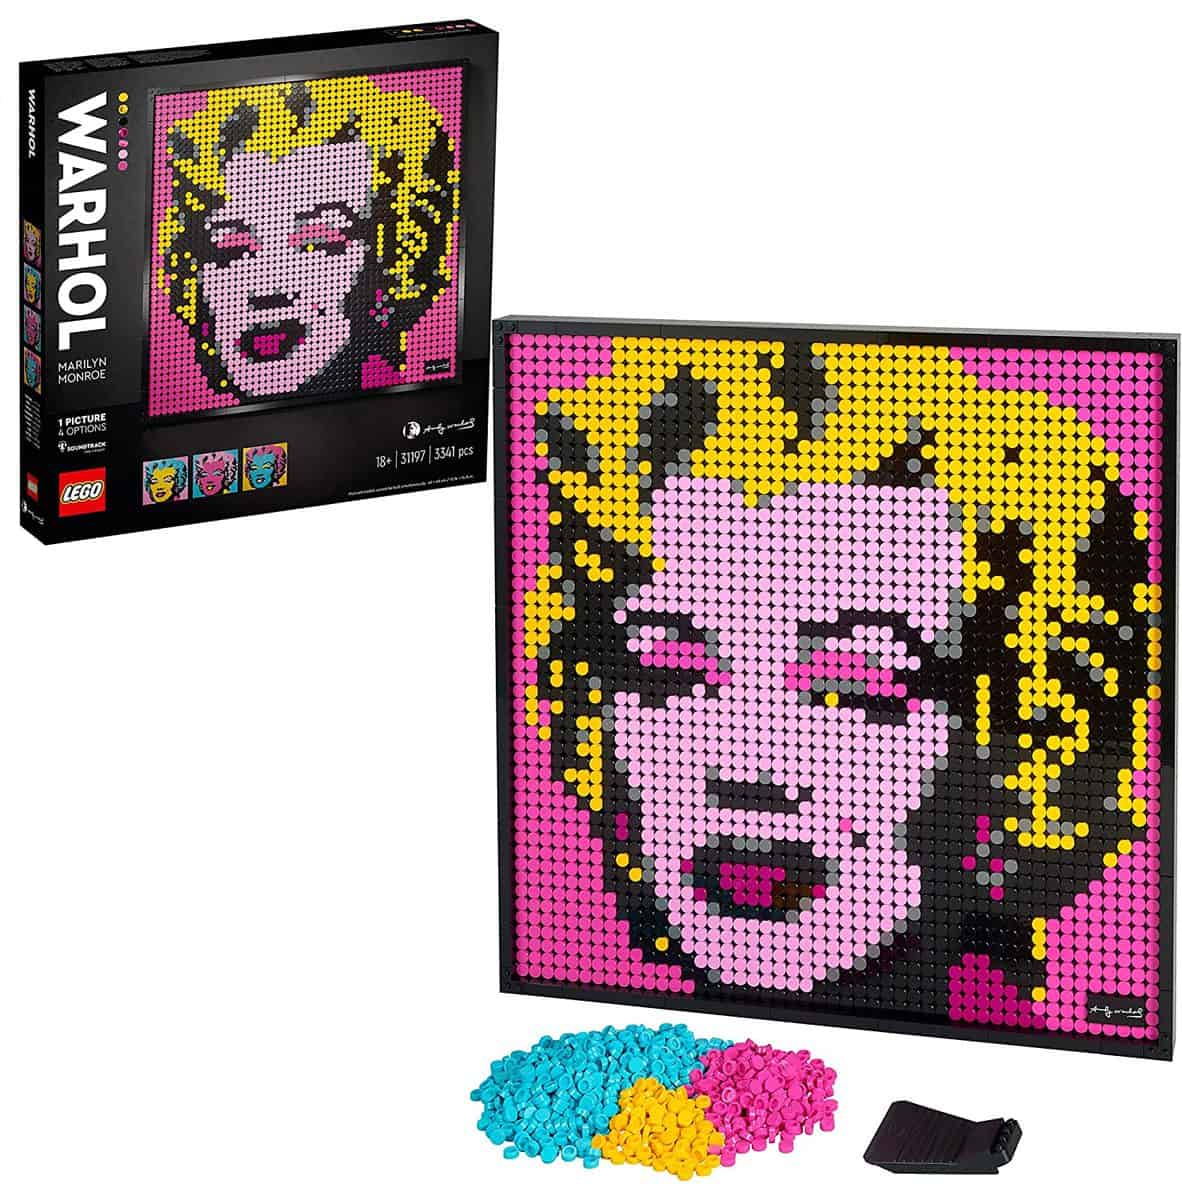 LEGO Art - Andy Warhol's Marilyn Monroe (31197) - für 70,88 € inkl. Versand statt 89,55 €